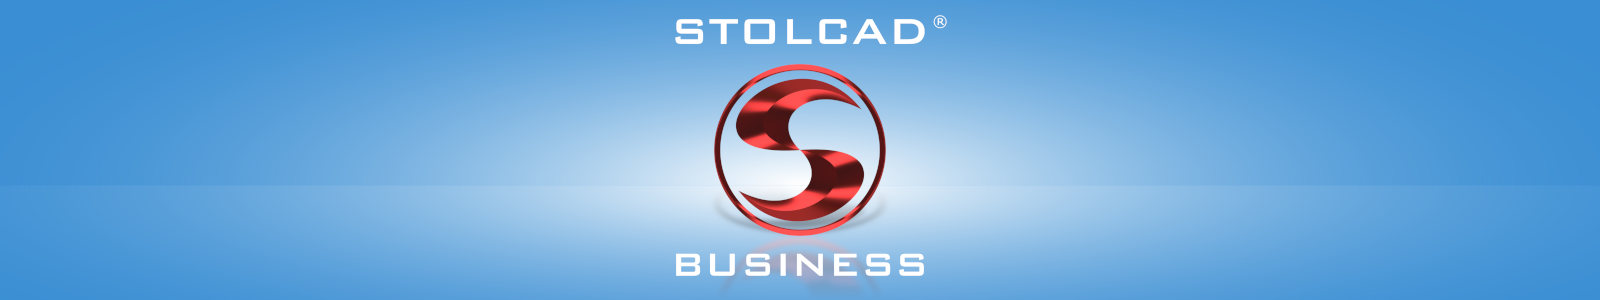 Stolcad Business - program pentru vânzătorii de ferestre, uși și jaluzele